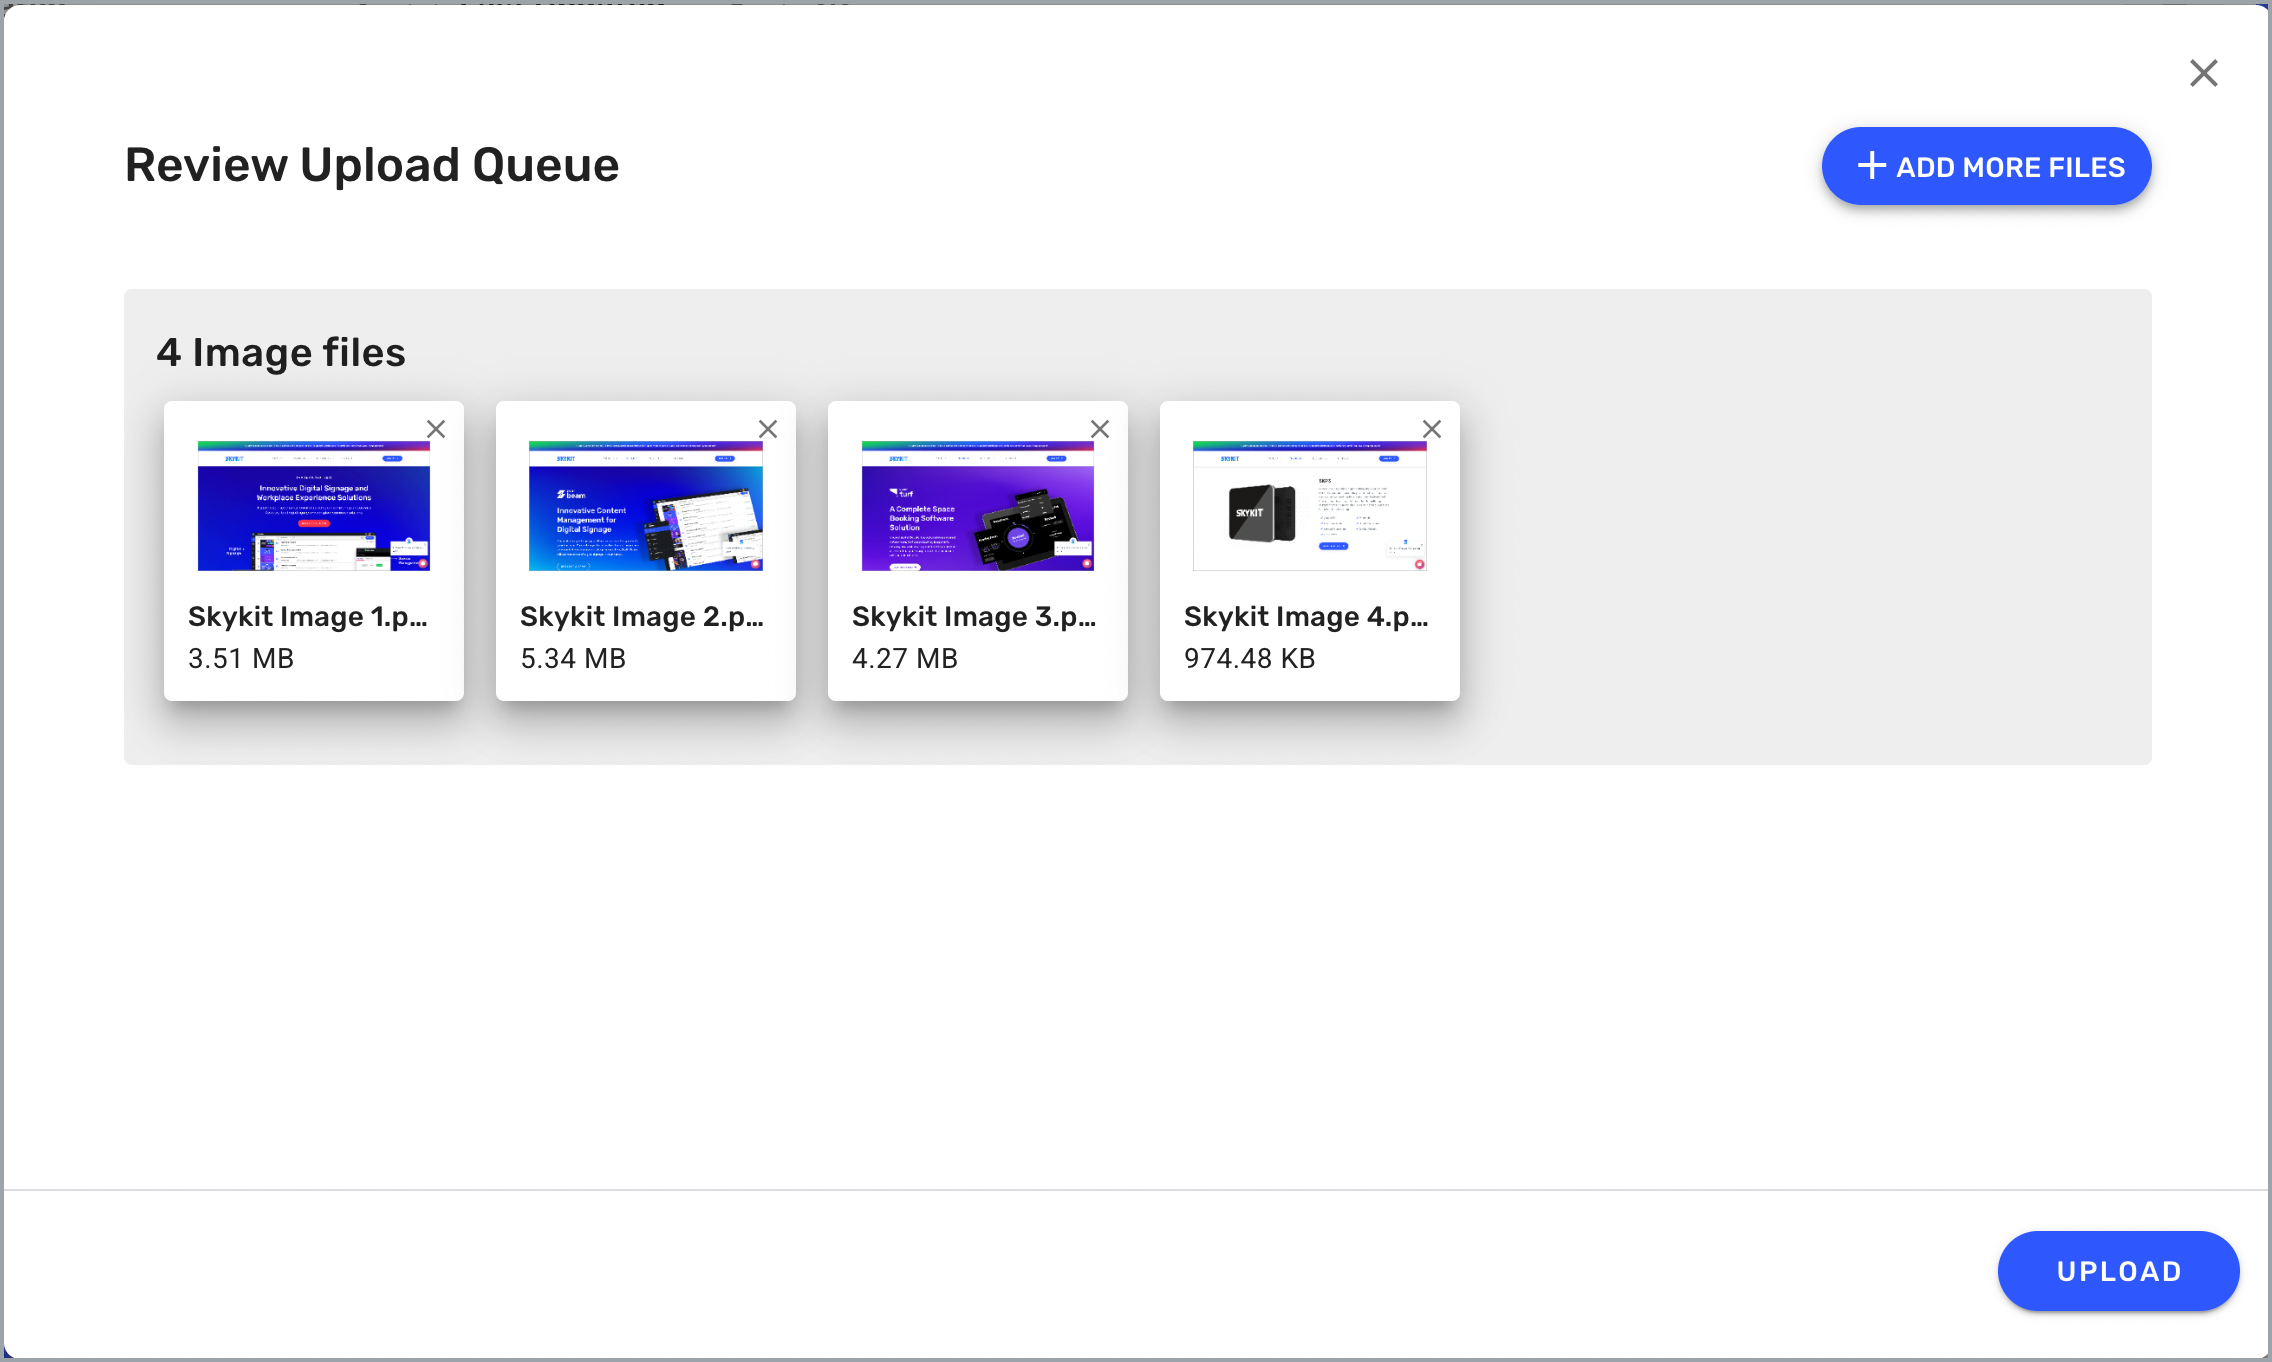 Review Upload Queue window showing images in queue